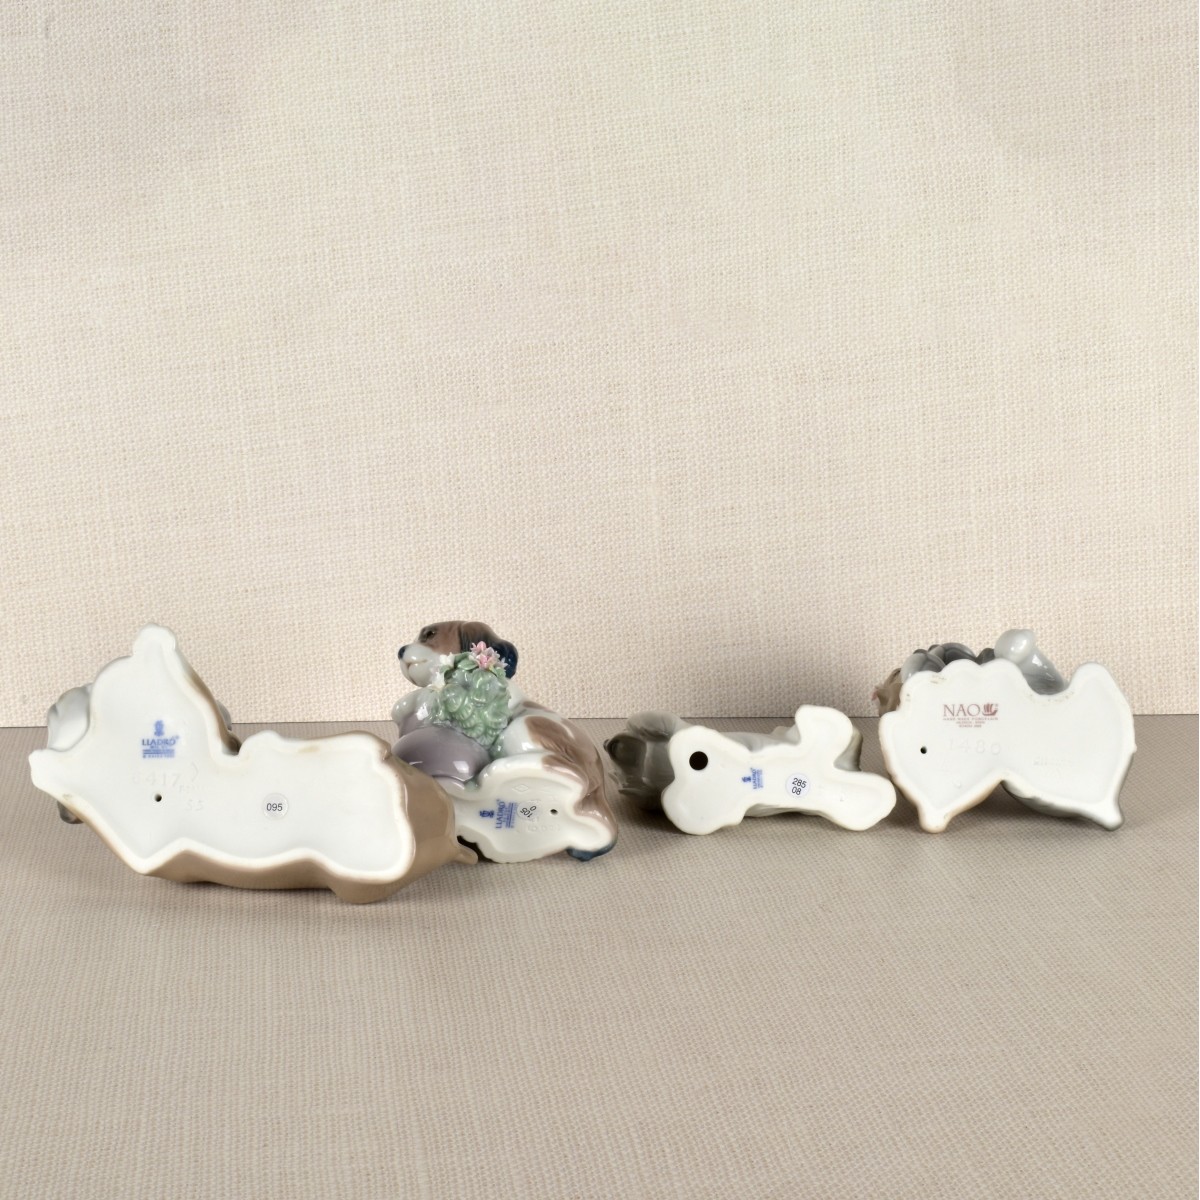 Four Lladro Porcelain Dog Figurines